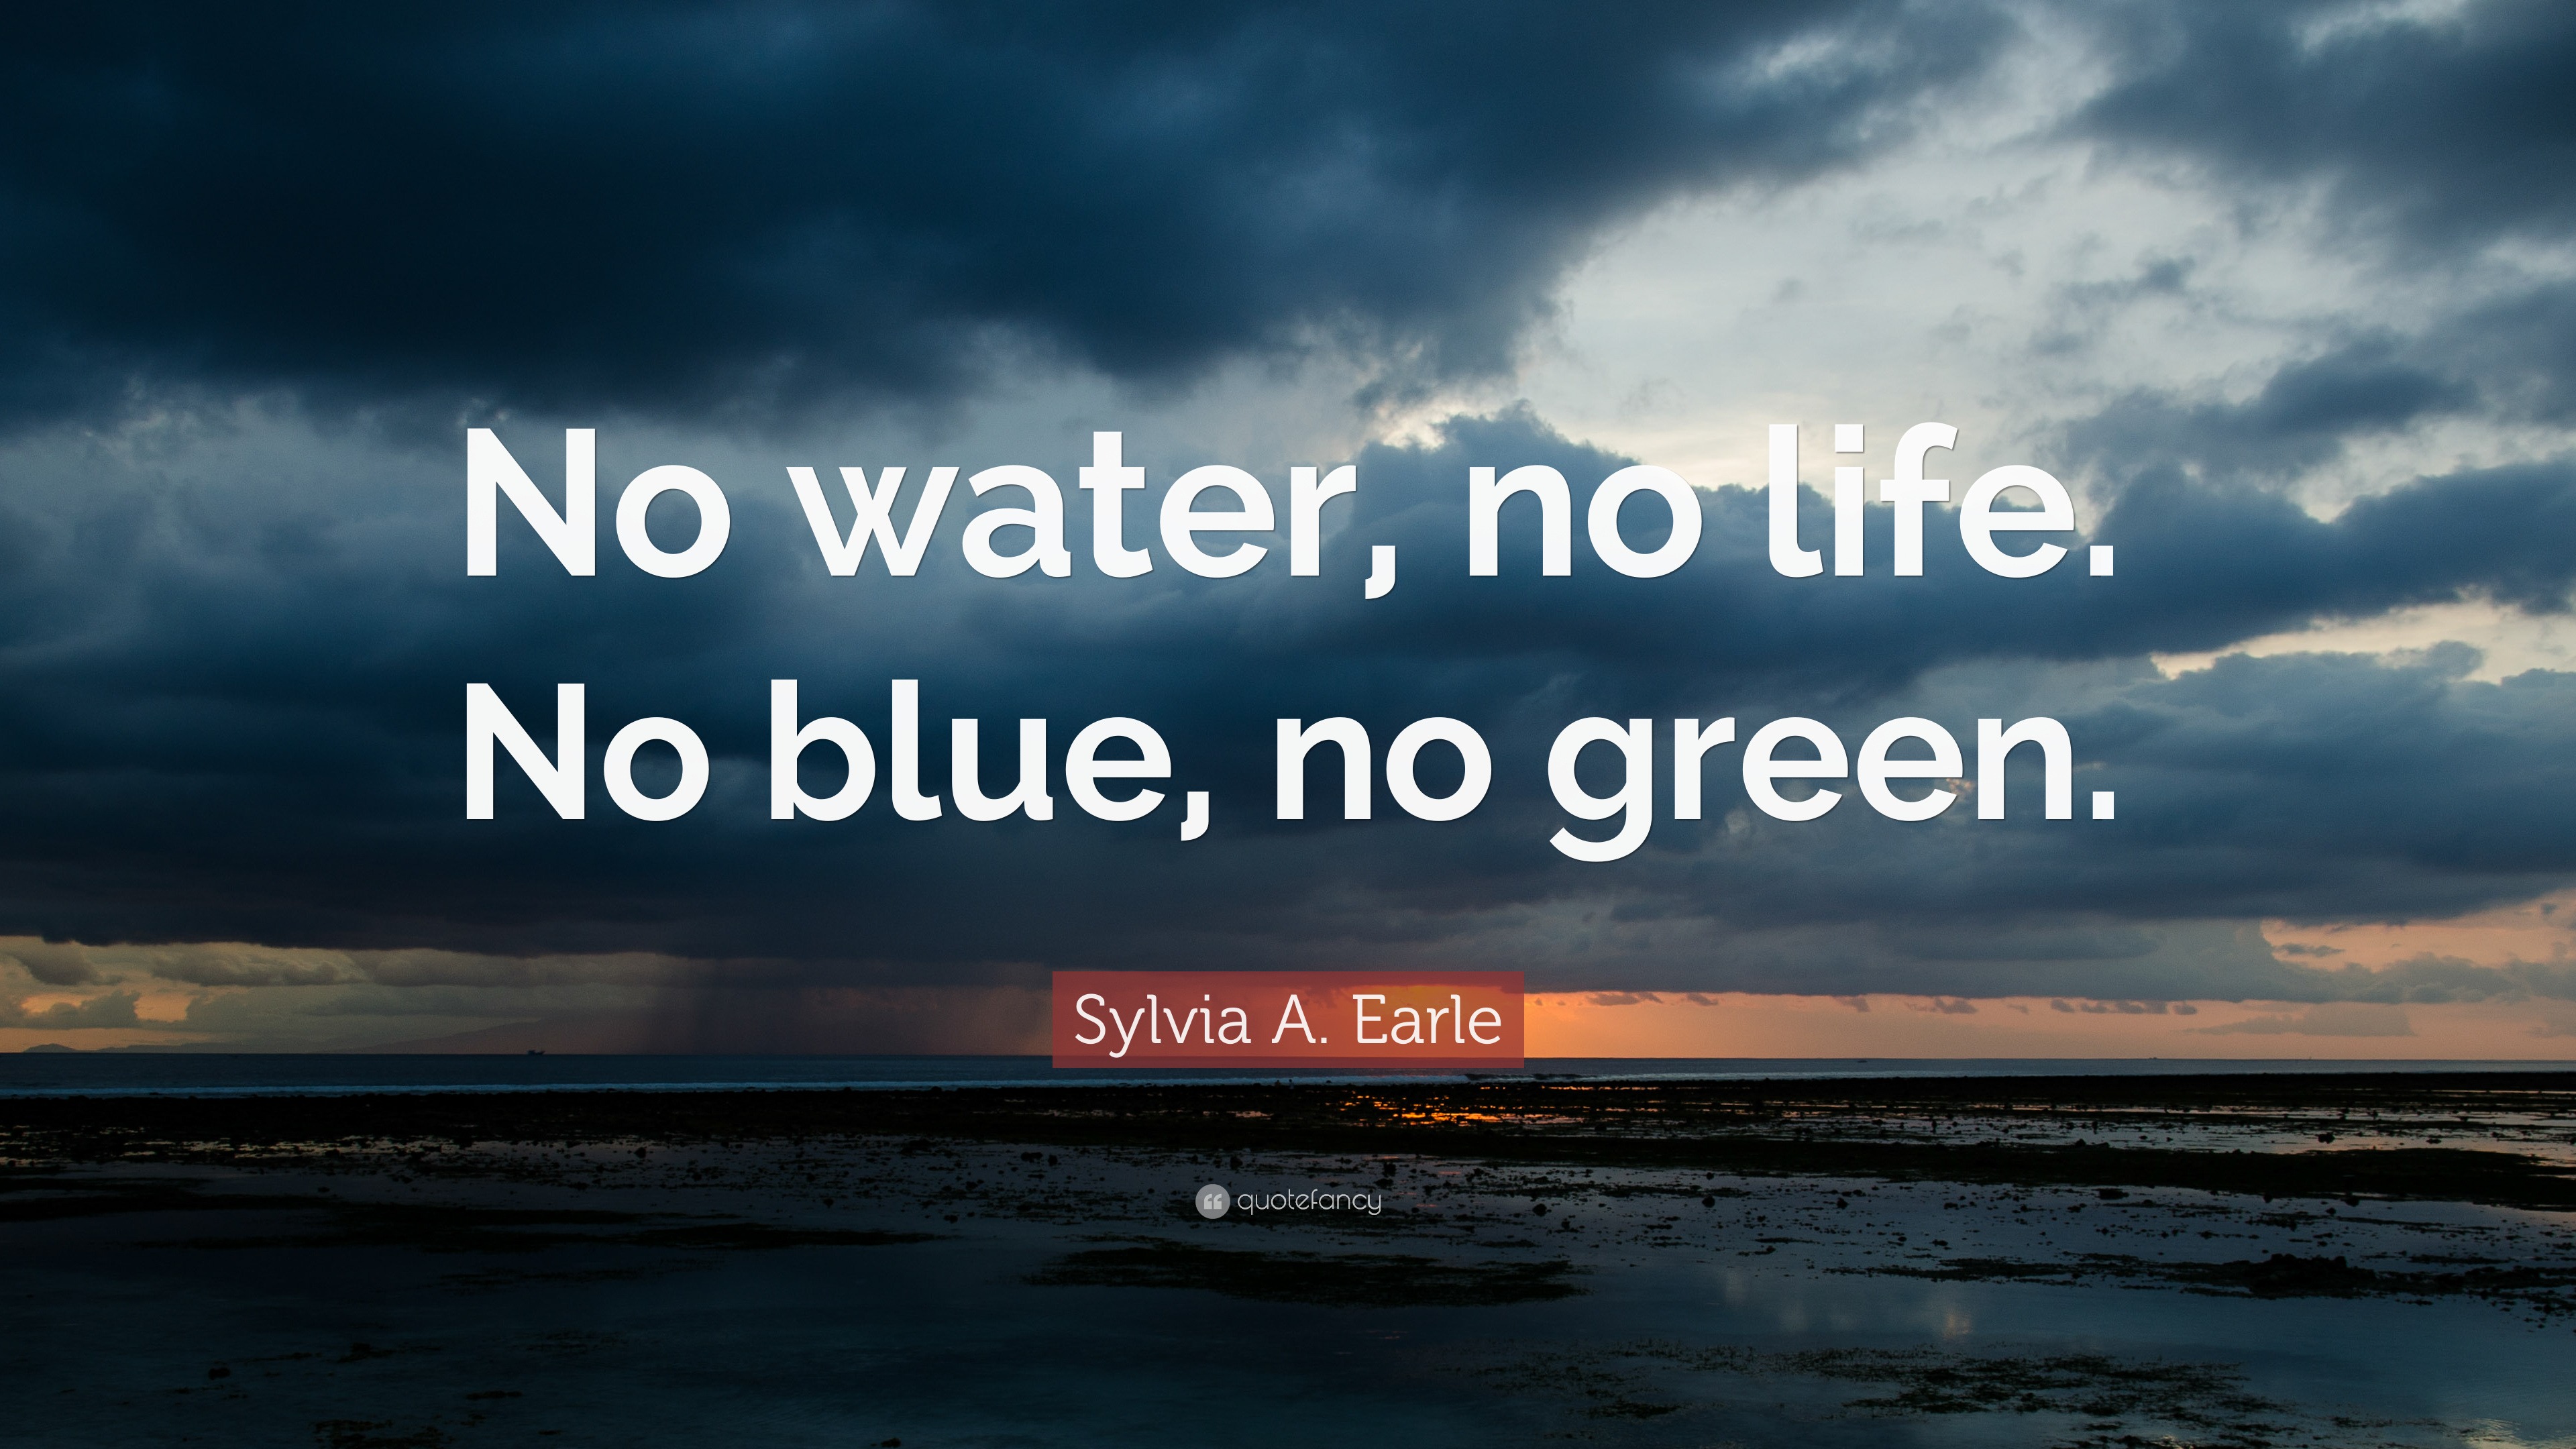 Sylvia A. Earle Quote: “No water, no life. No blue, no green.” (7